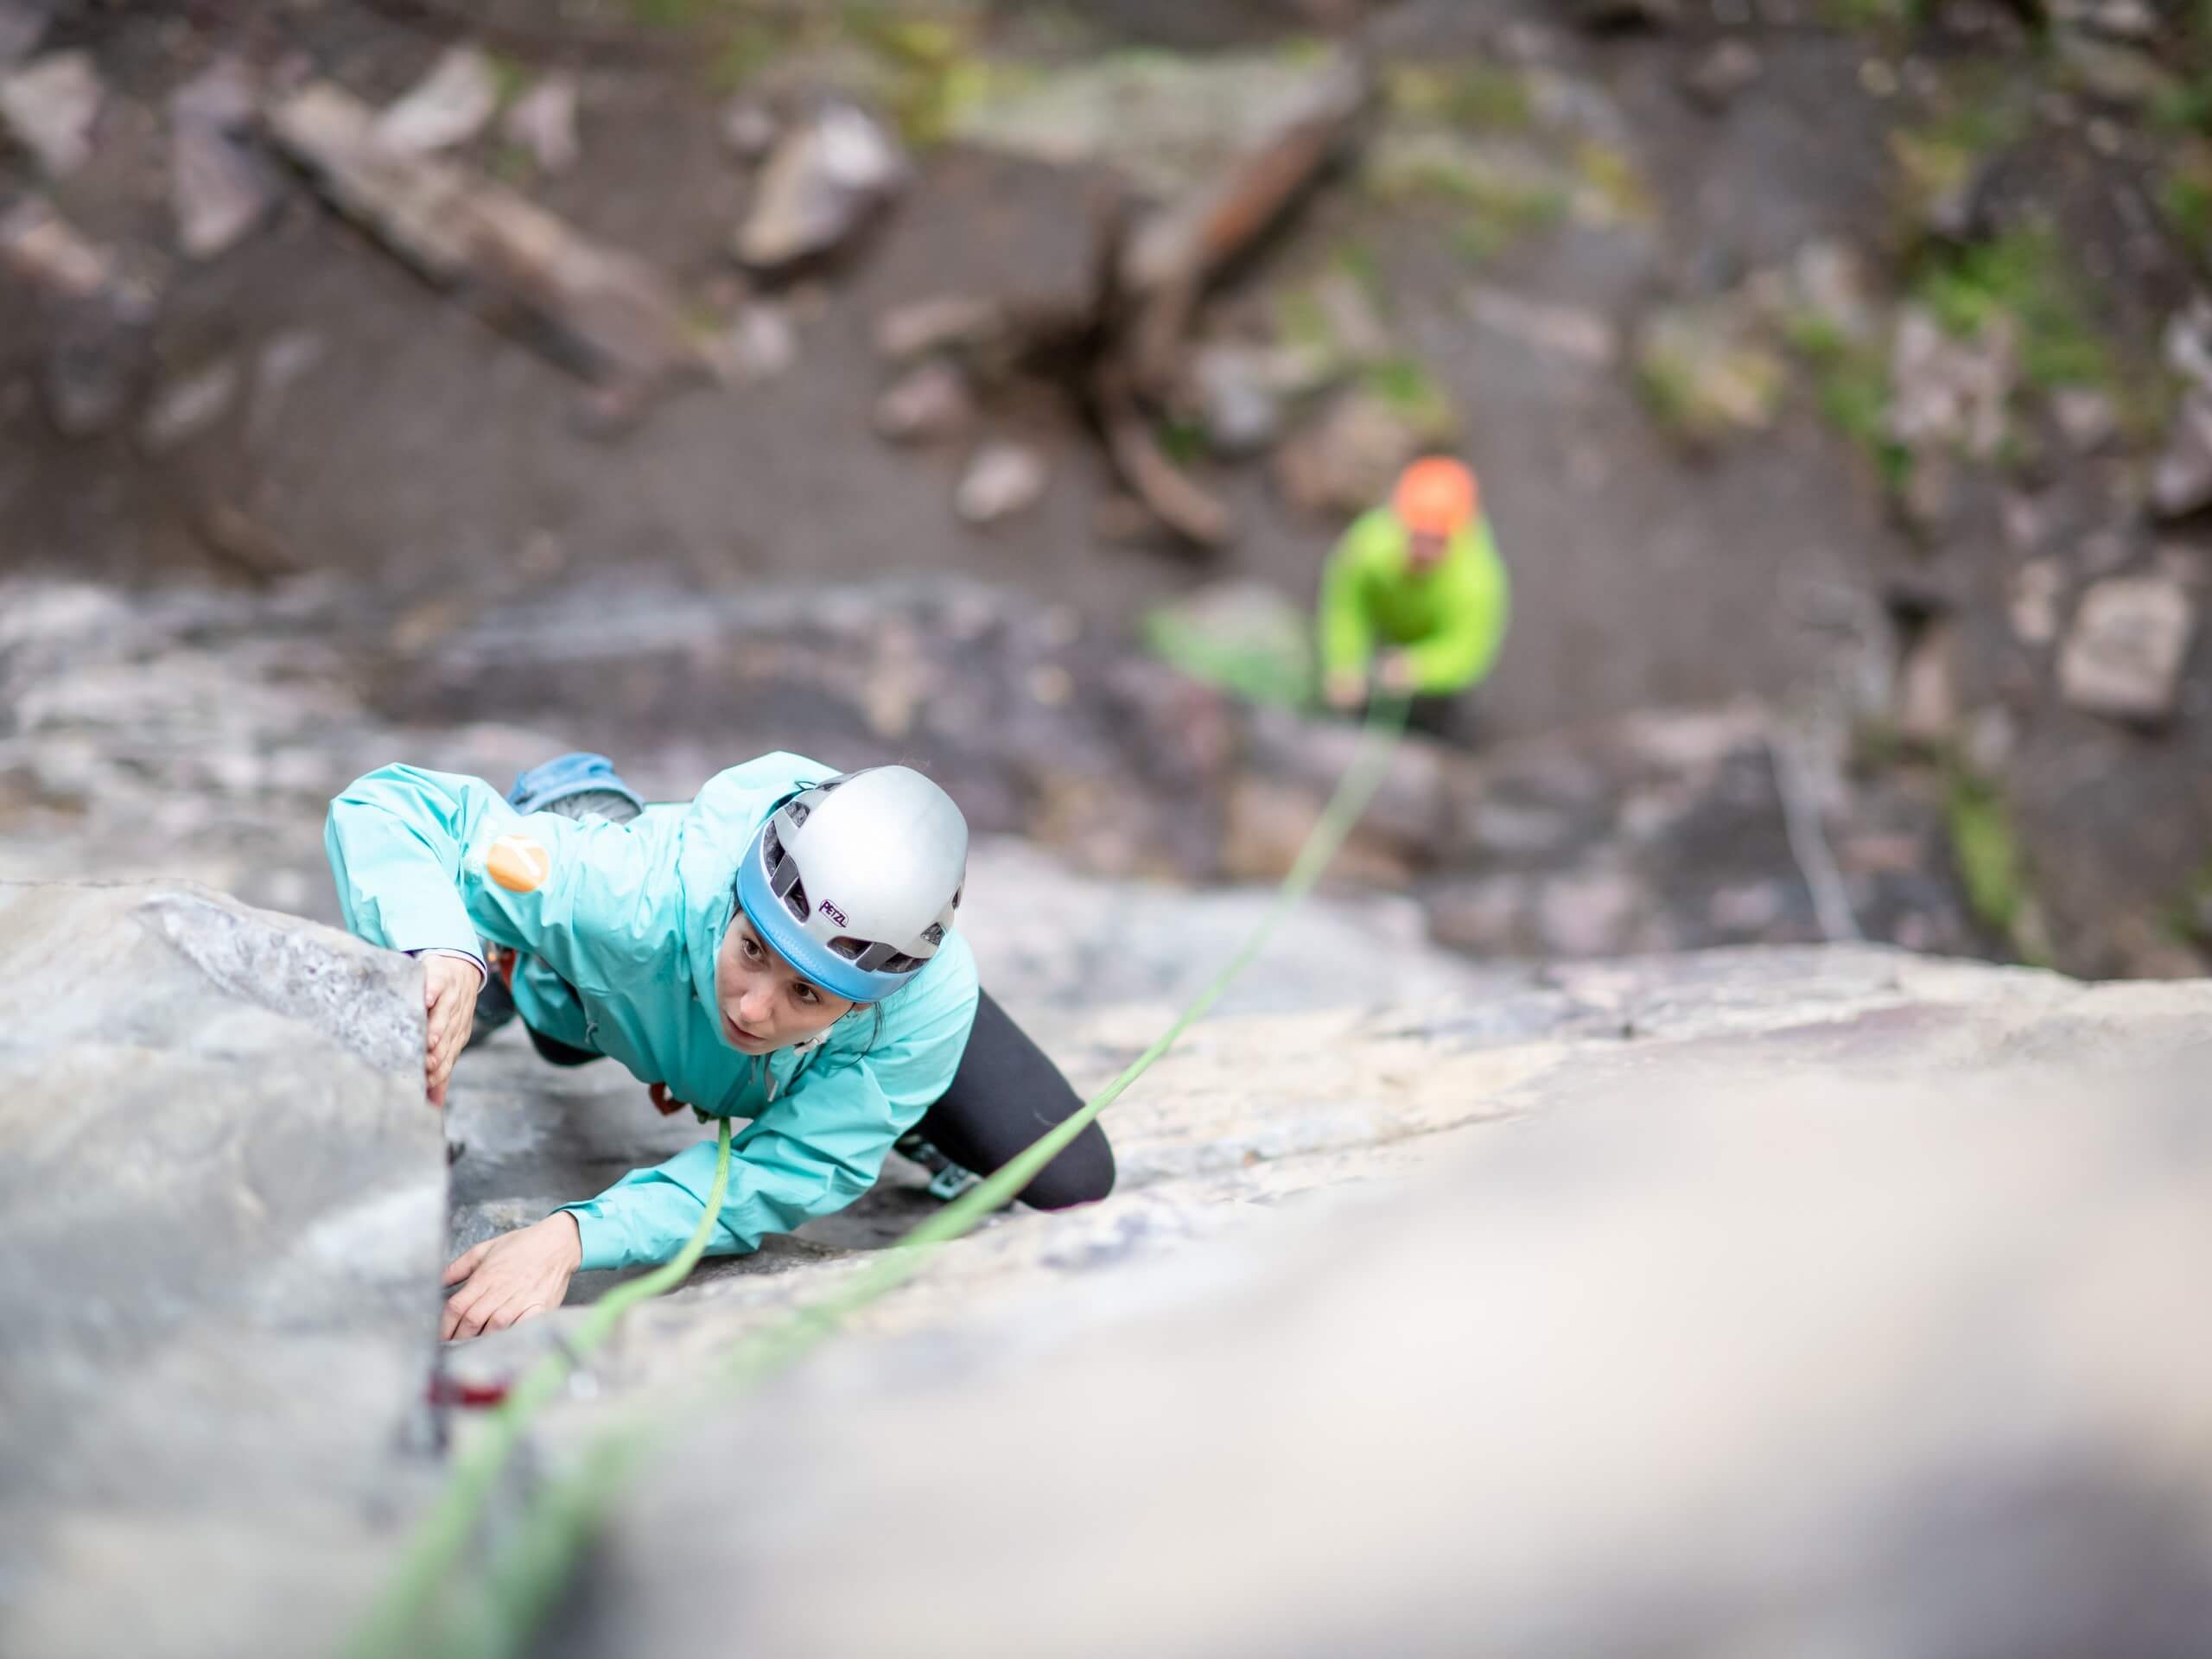 Woman climbing up on a rock climbing course, photo by @evazolaphoto